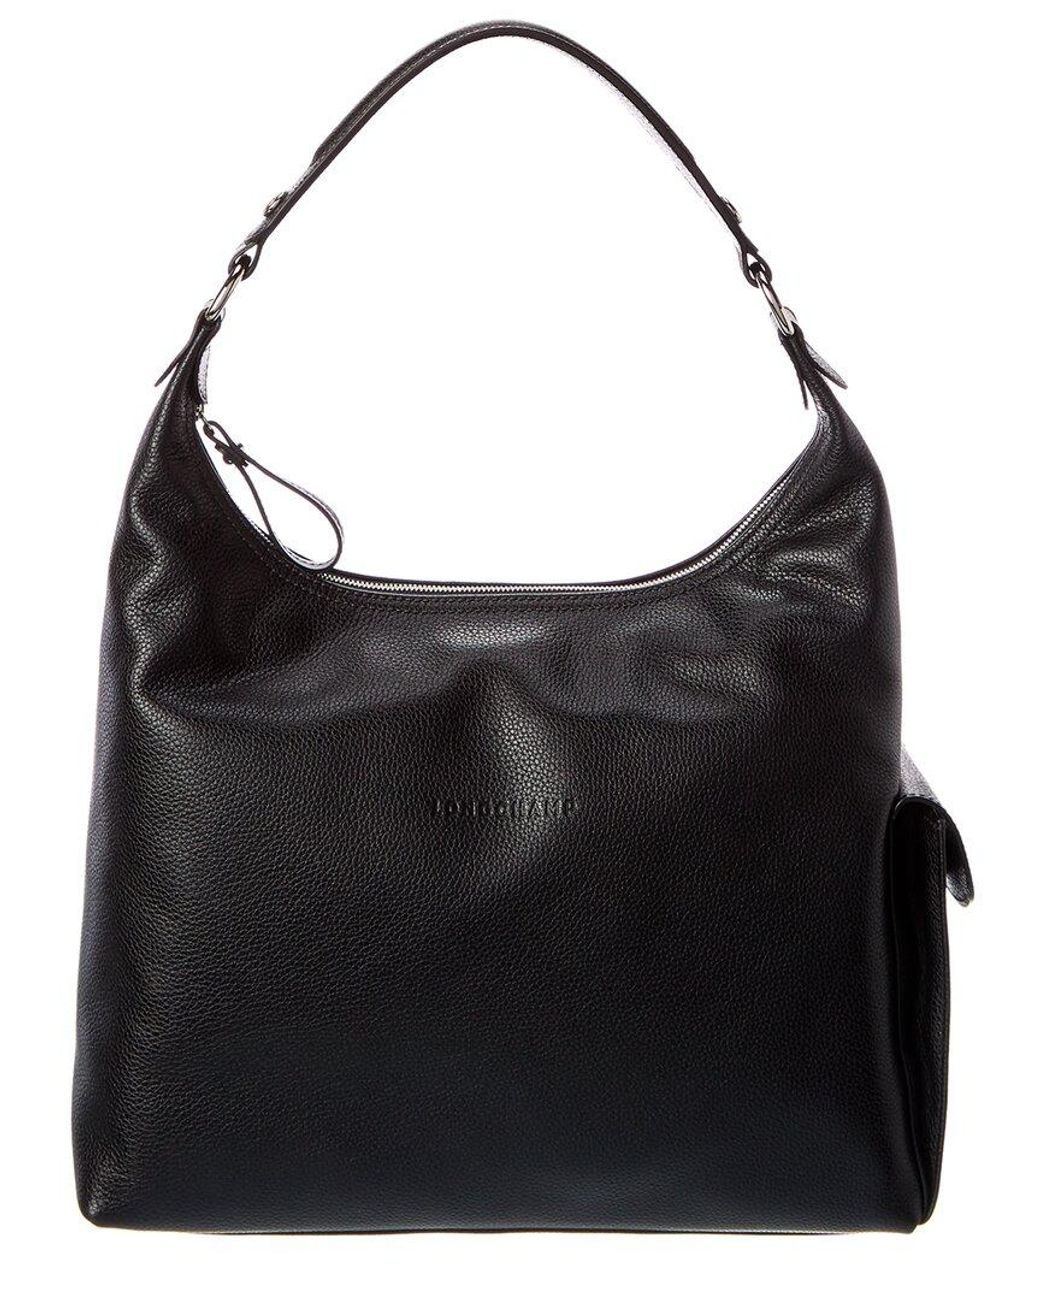 Longchamp Le Foulonne Leather Hobo Bag in Black | Lyst